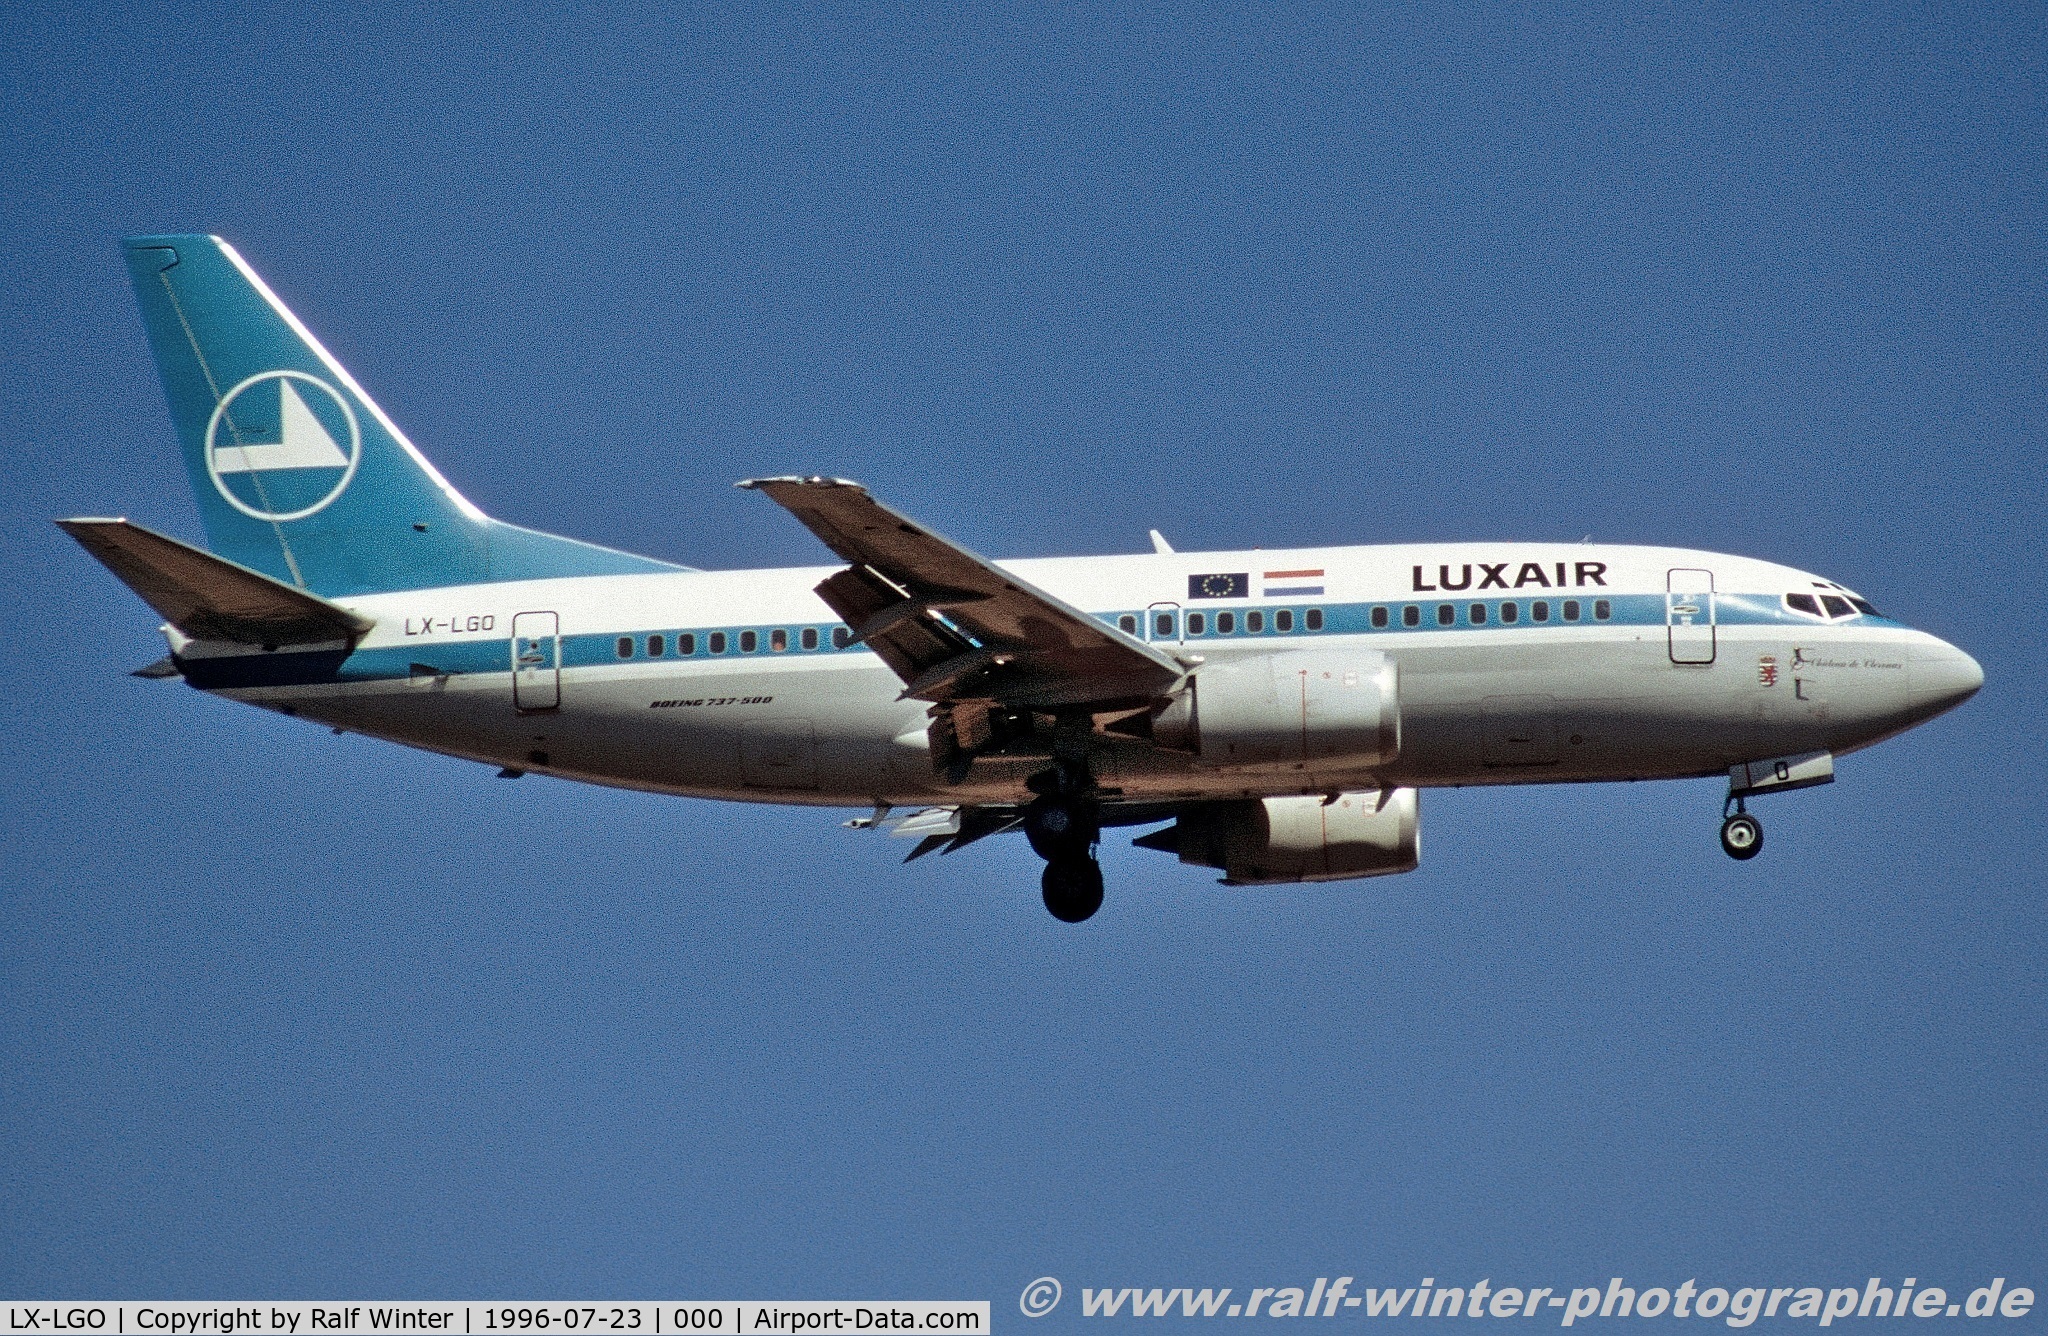 LX-LGO, 1992 Boeing 737-5C9 C/N 26438, Boeing 737-5C9 - LG LGL Luxair 'Chateau de Clervaux)' - 26438 - LX-LGO - 23.07.1996